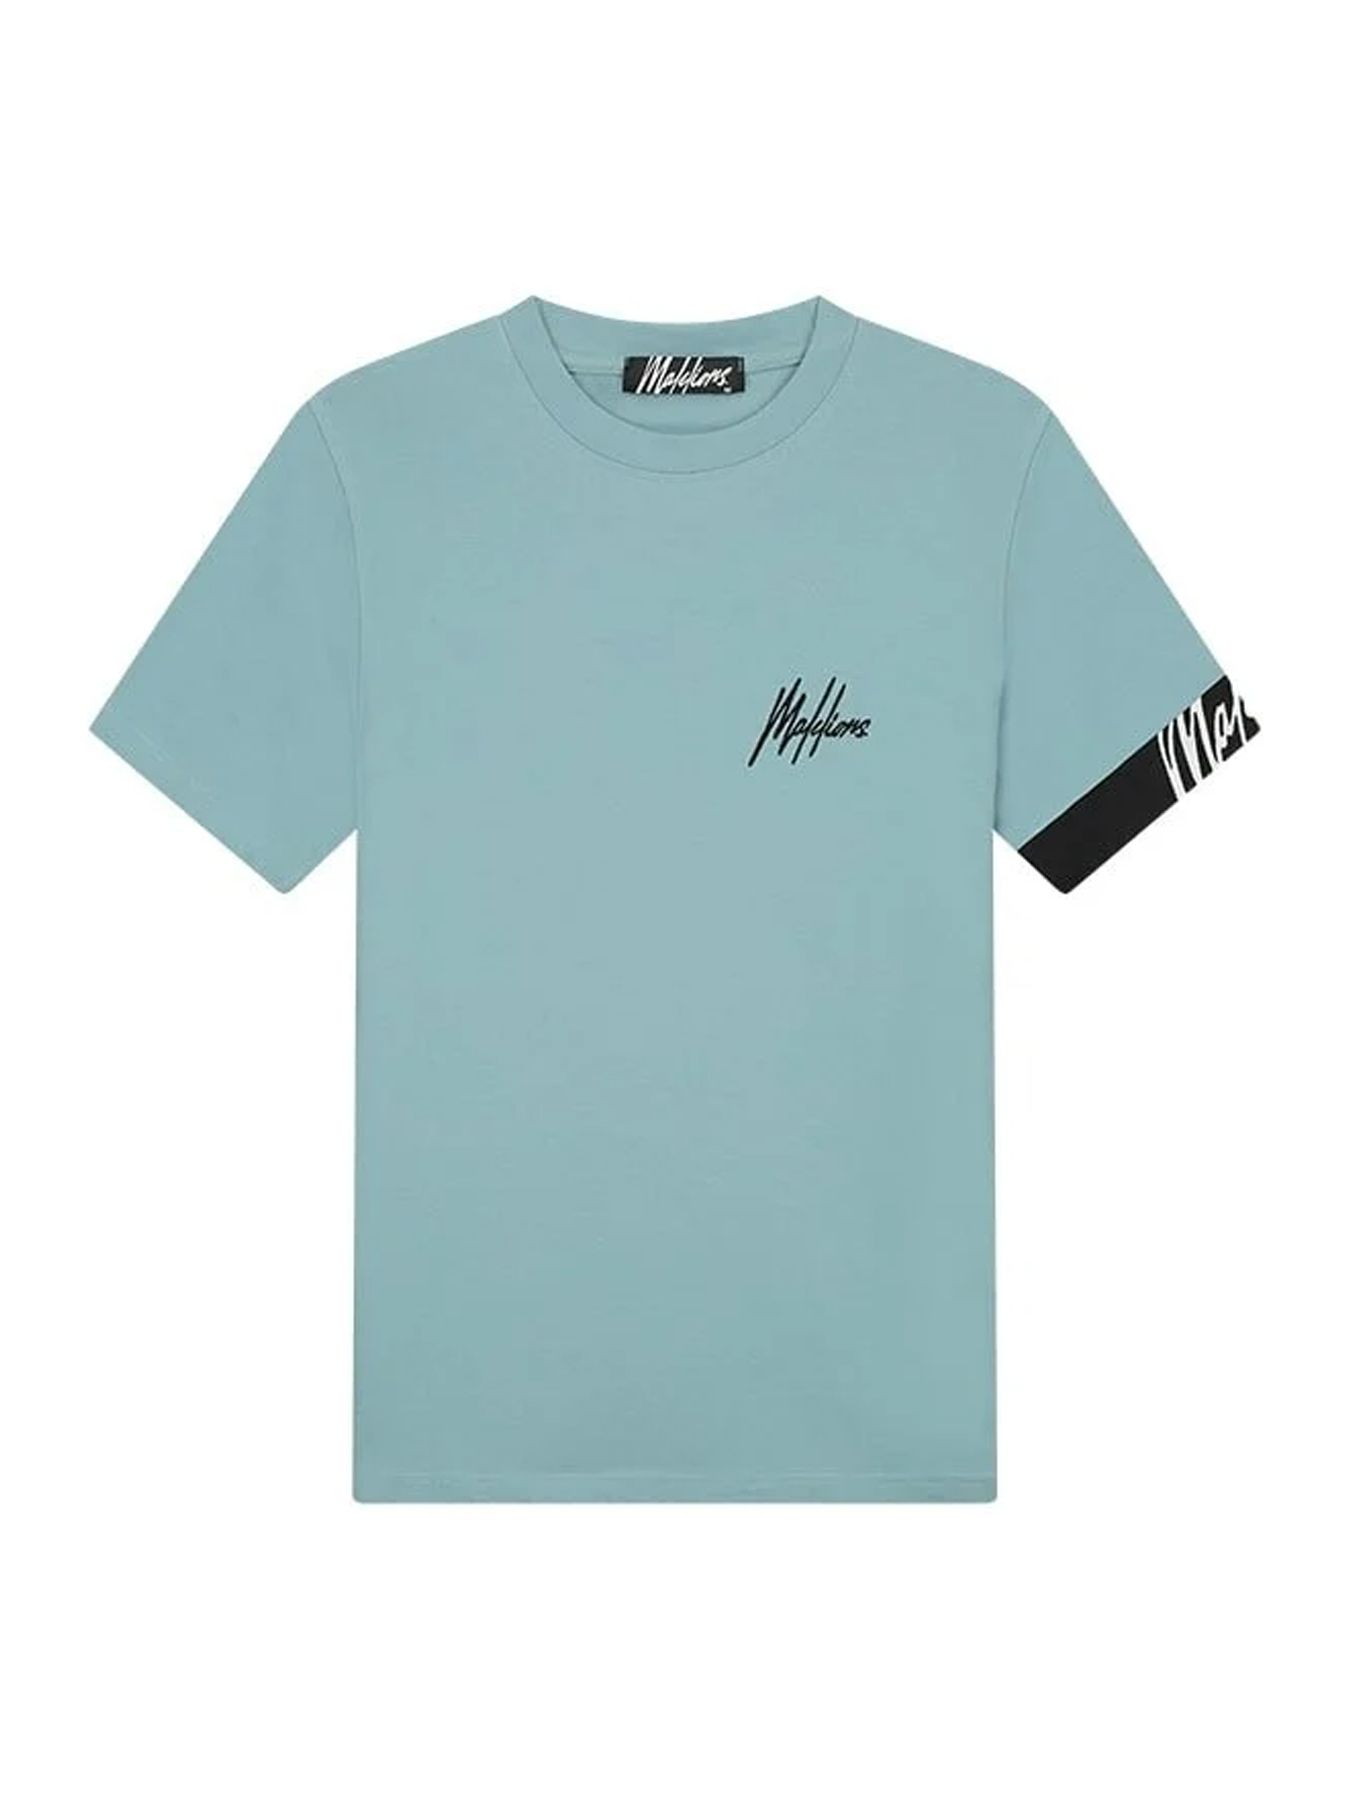 Malelions Men Captain t-shirt 2.0 light blue/black 00108667-715